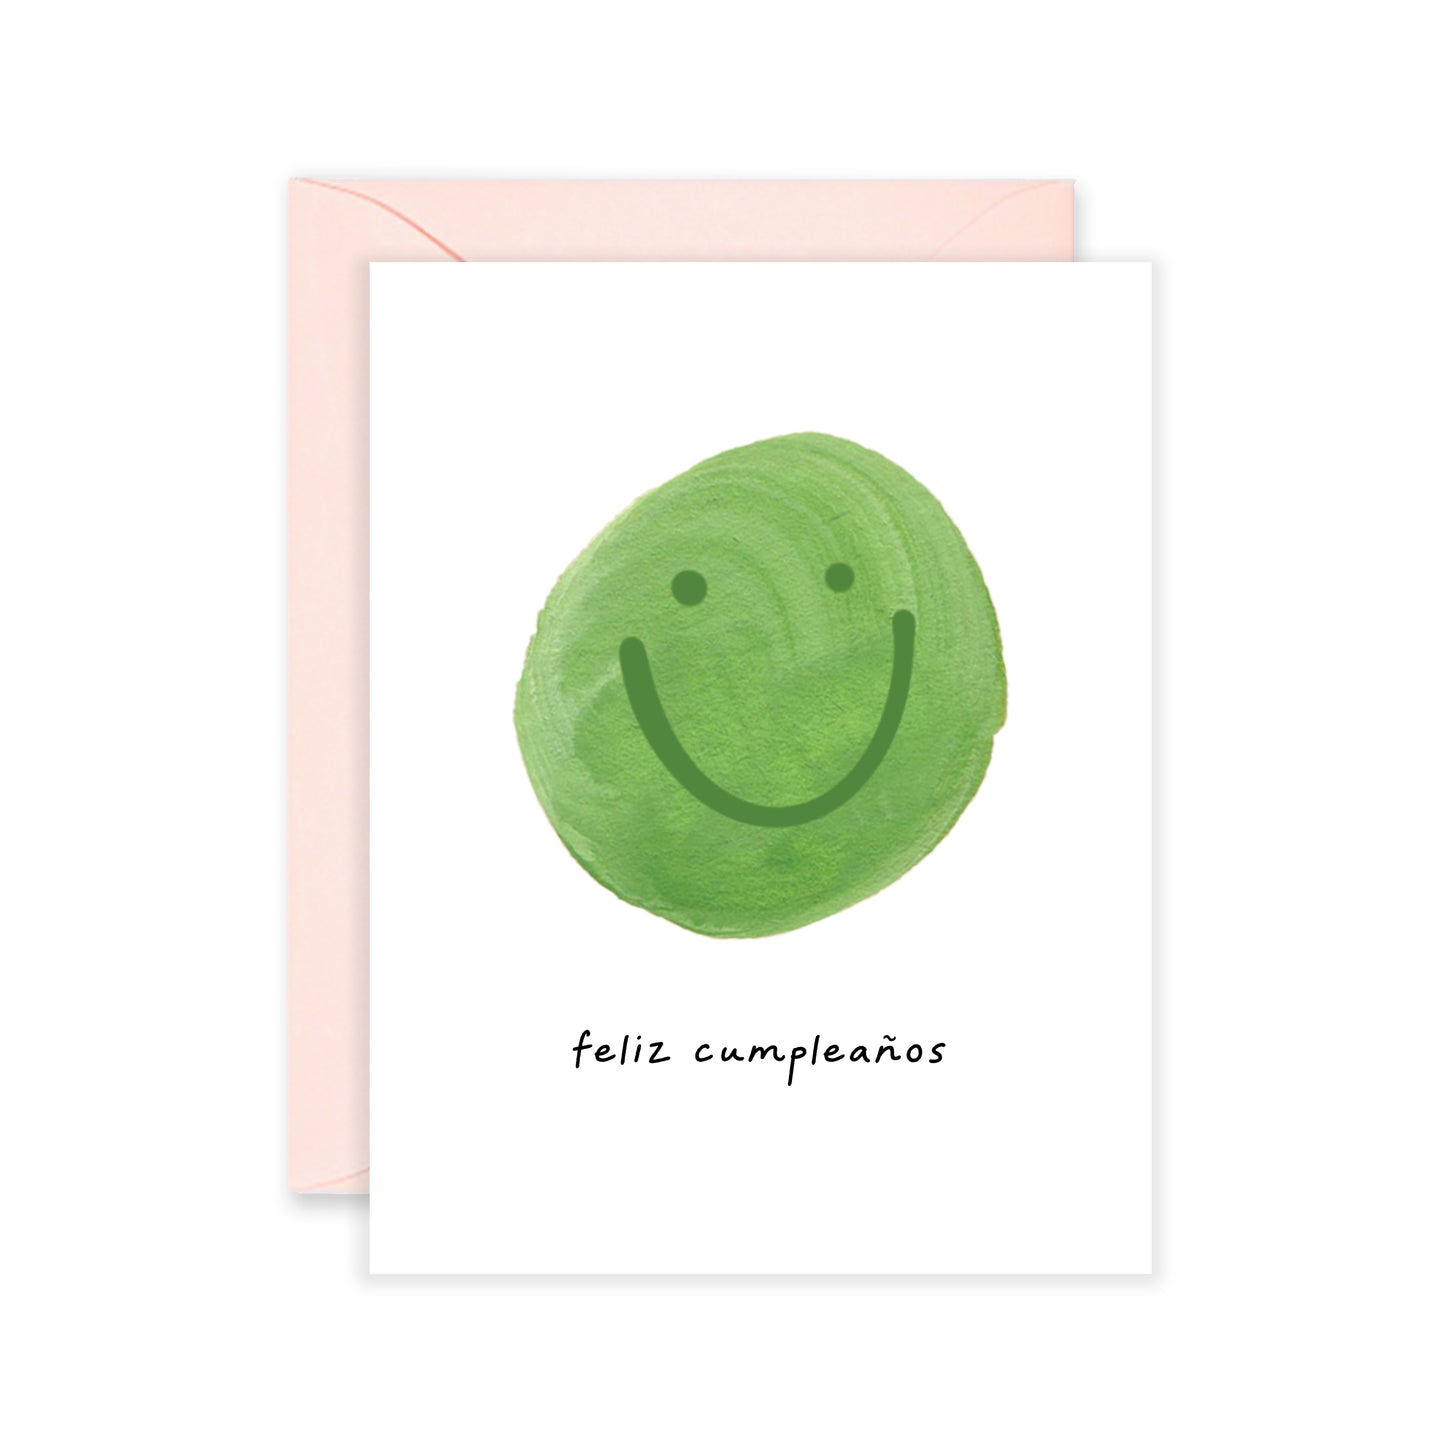 Green Smiley Feliz Cumpleanos Greeting Card